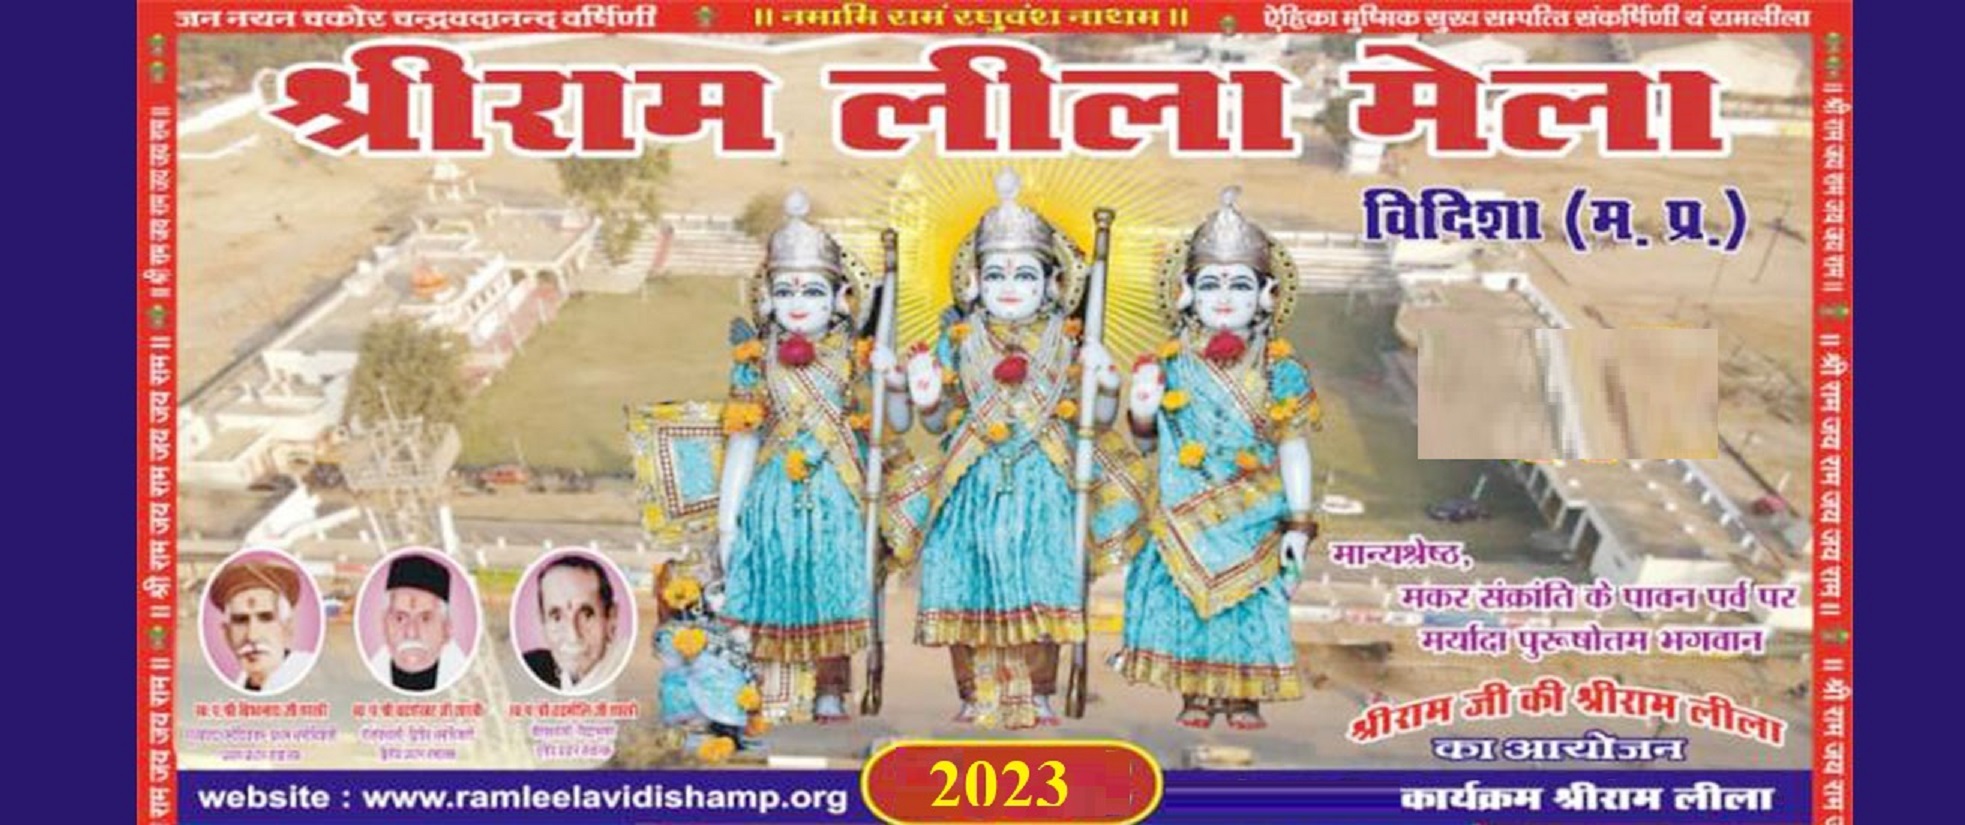 Shri Ram Leela Mela